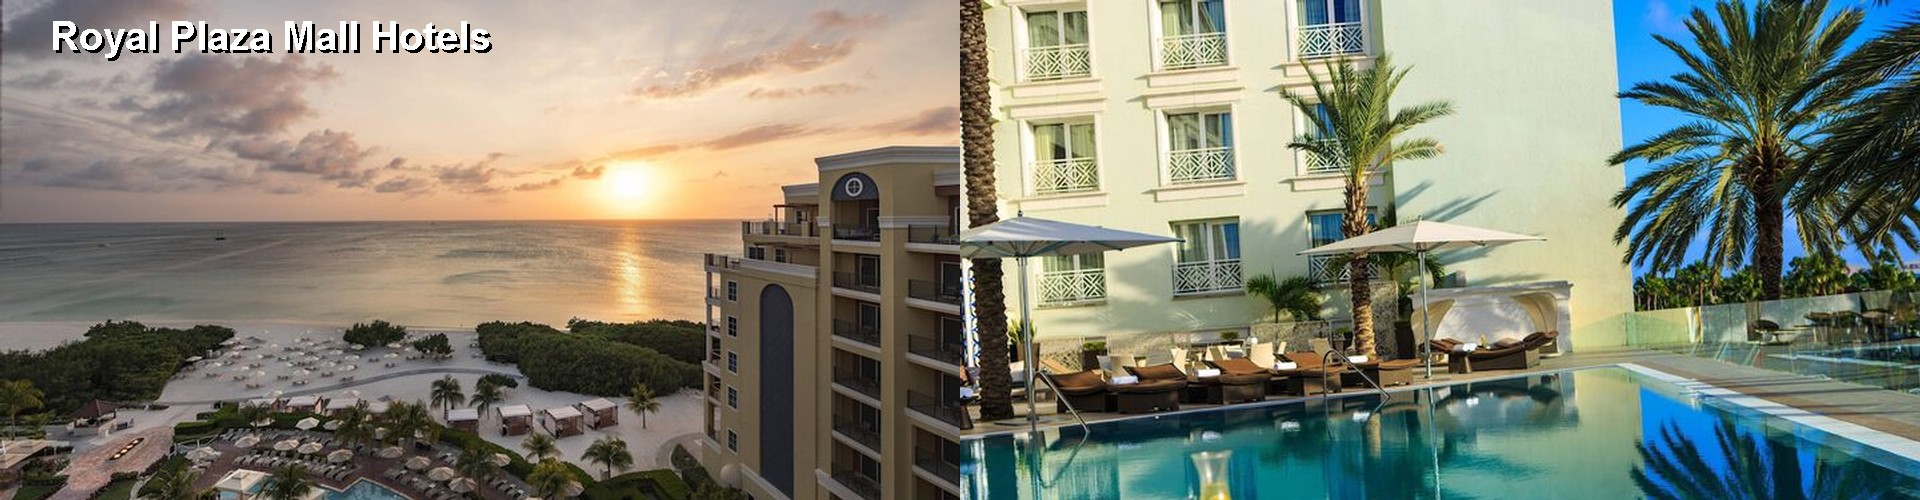 5 Best Hotels near Royal Plaza Mall